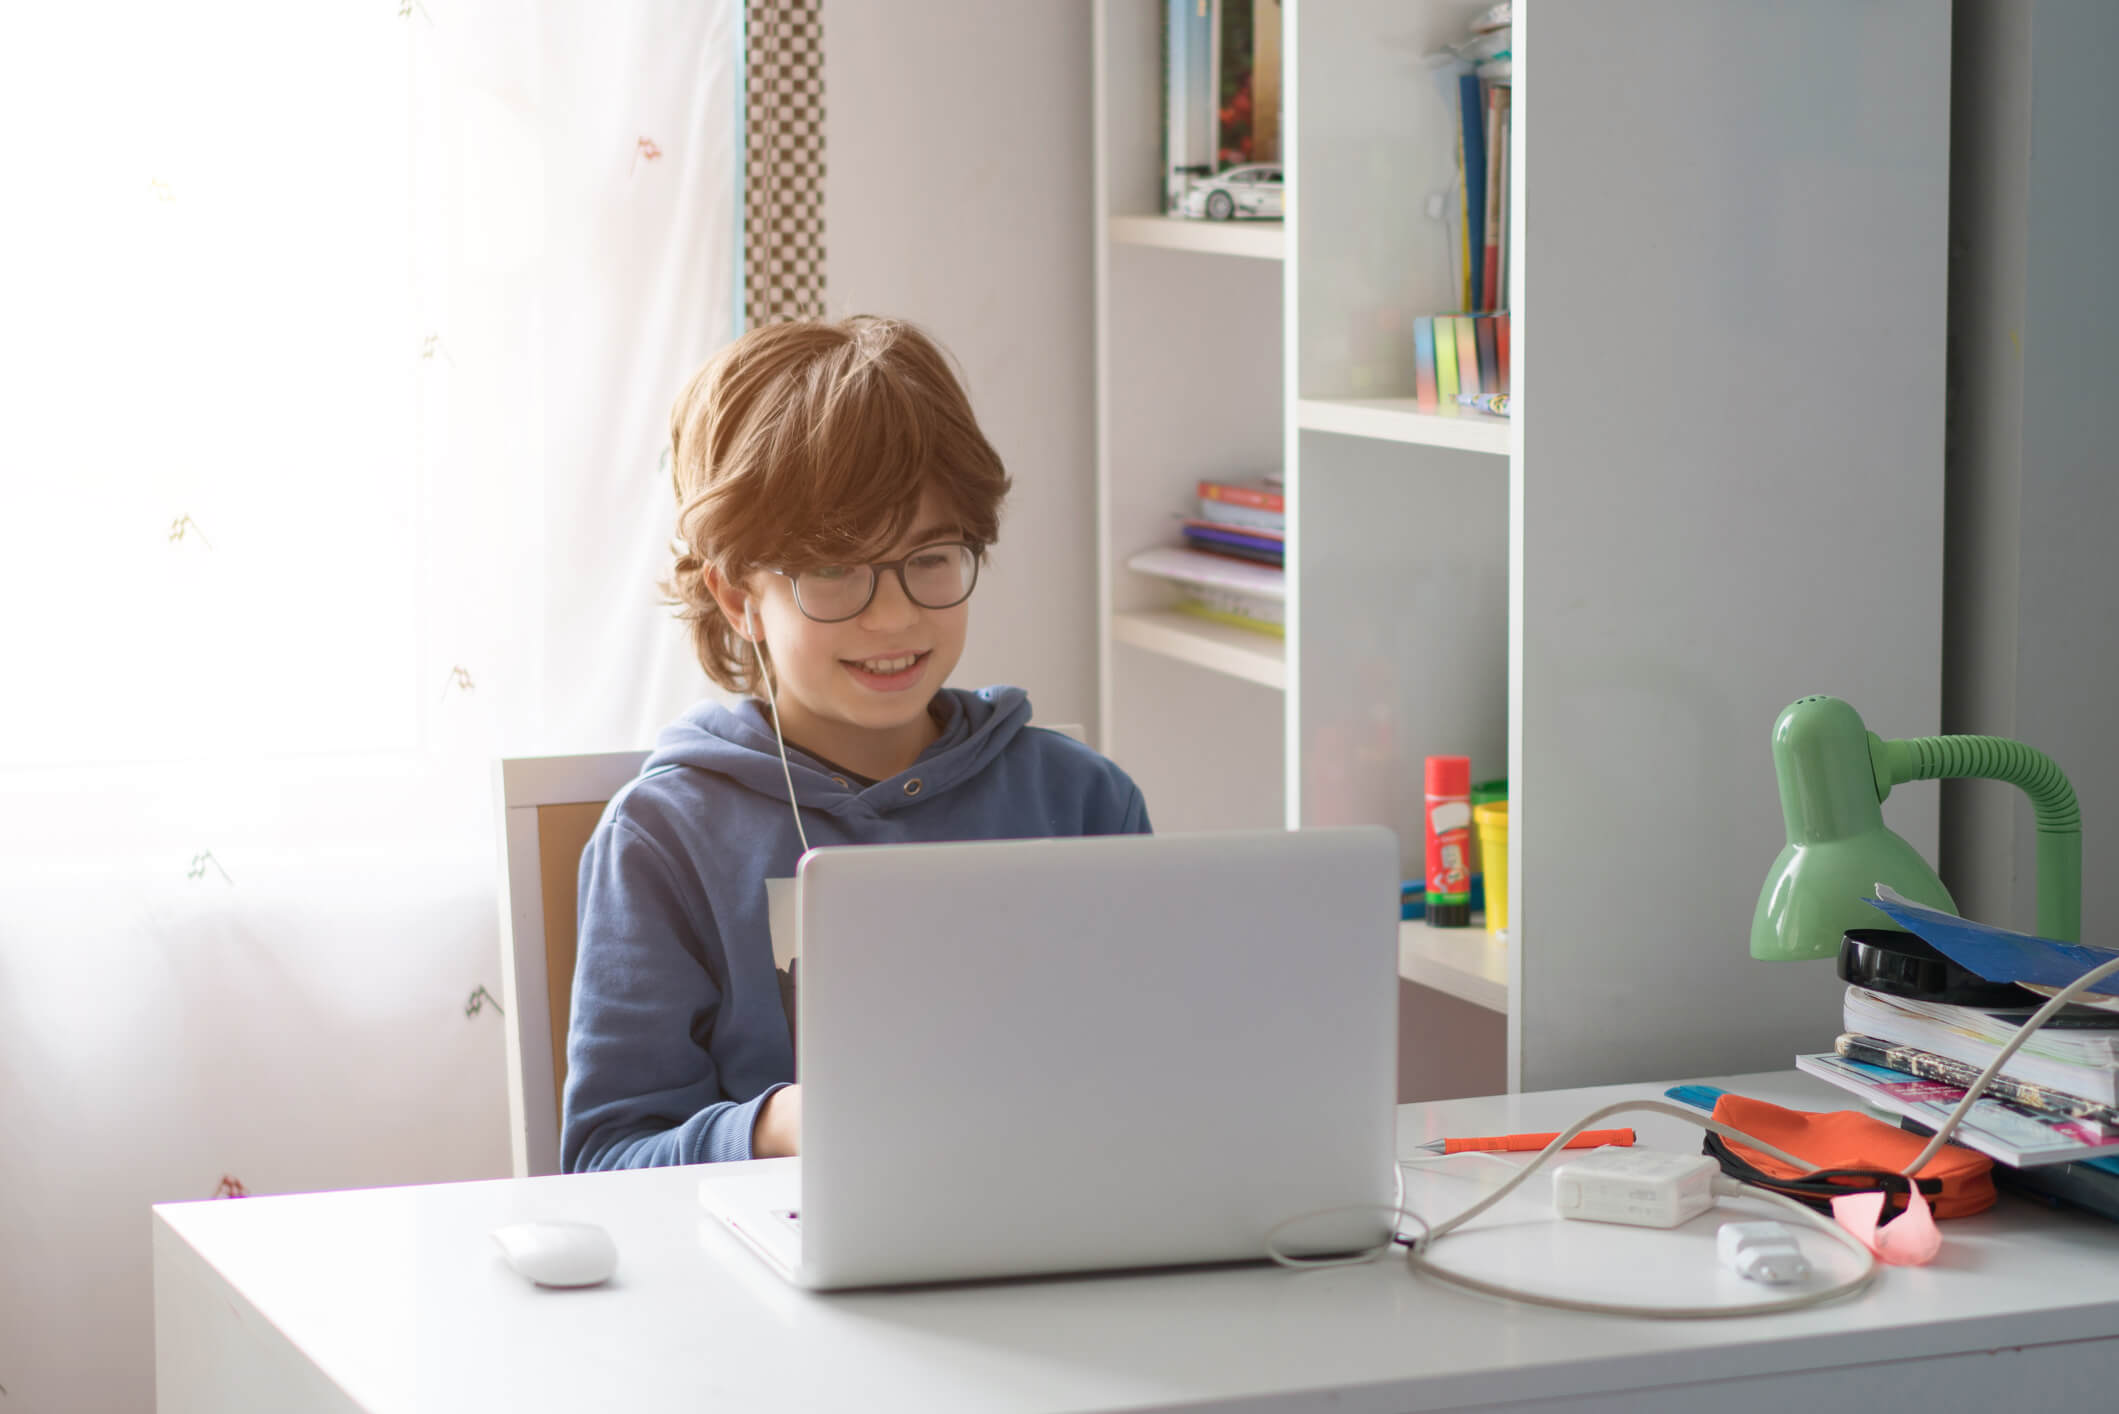 10 year old boy coding on laptop